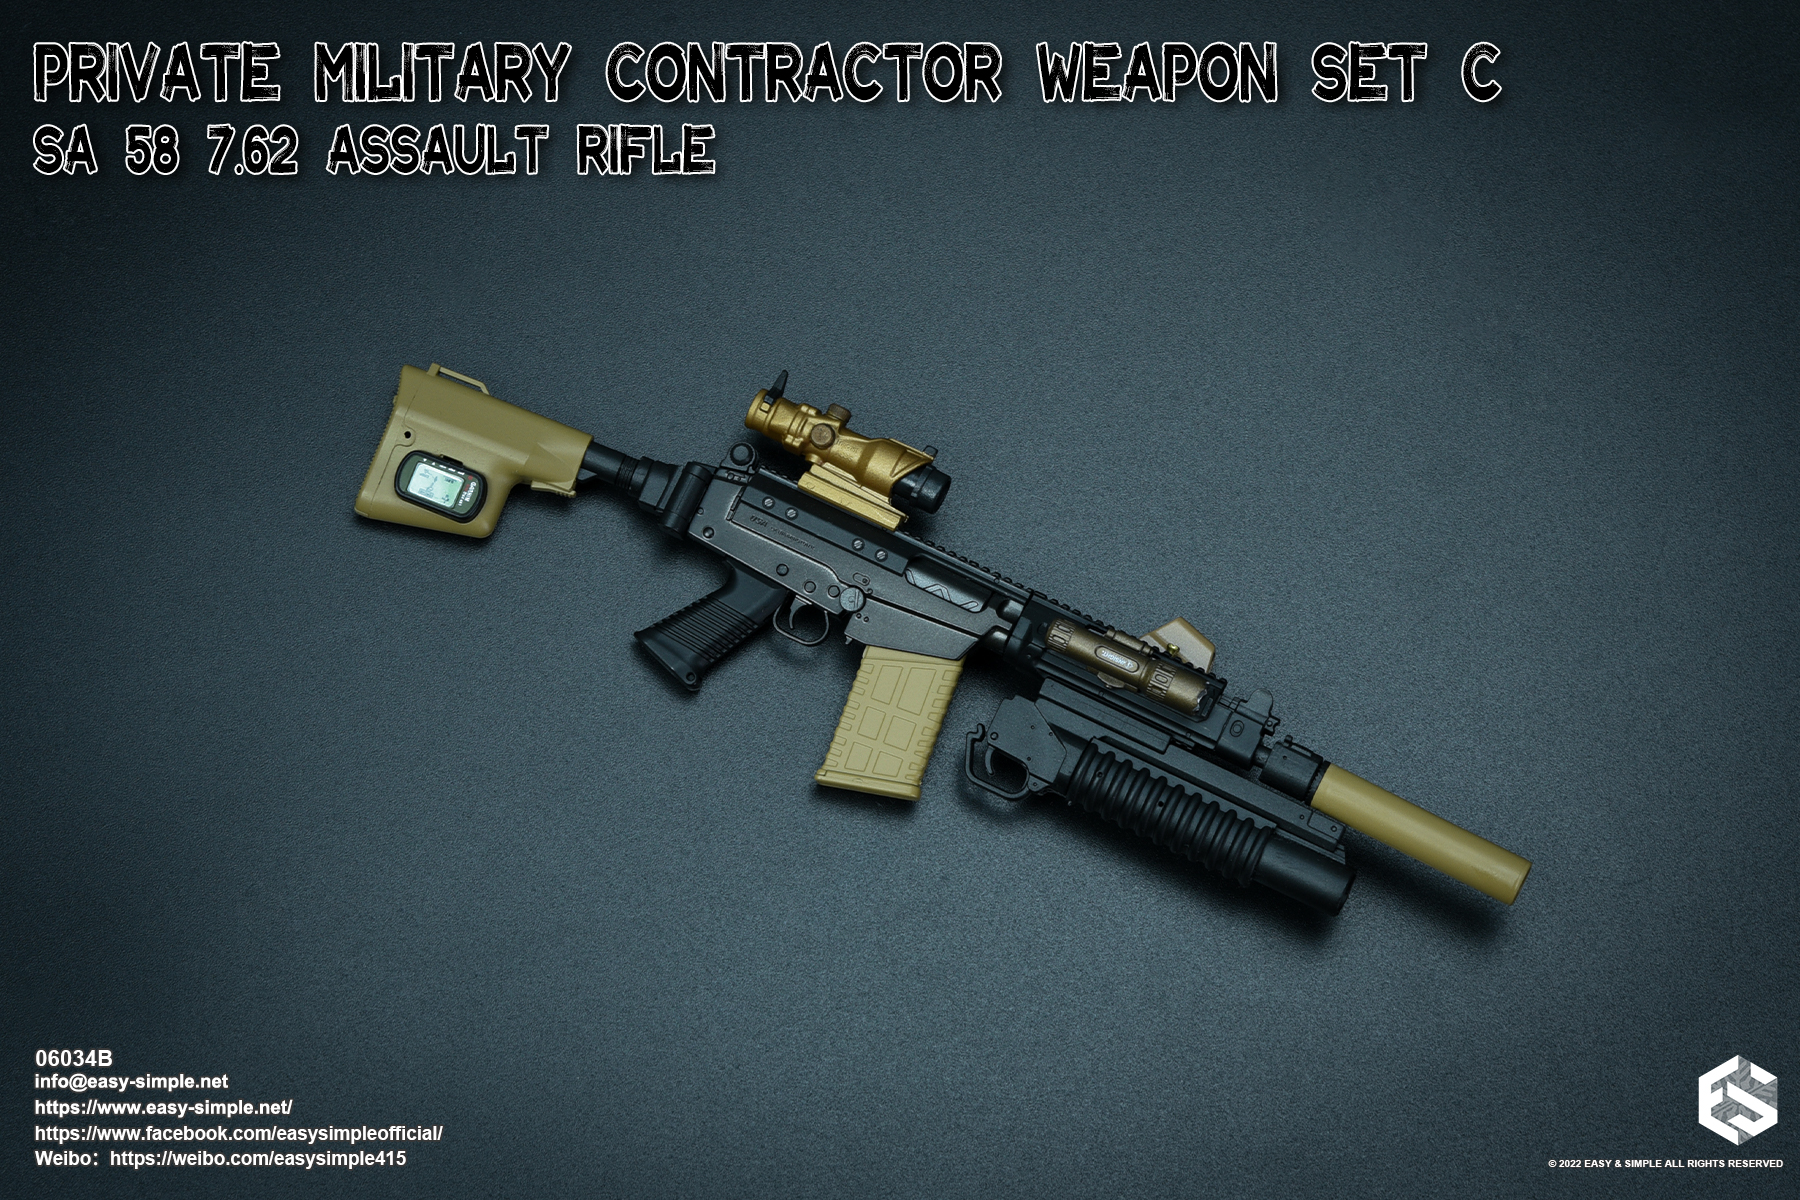 Easy&Simple 06034 PMC Weapon Set C SA 58 7.62 Assault Rifle